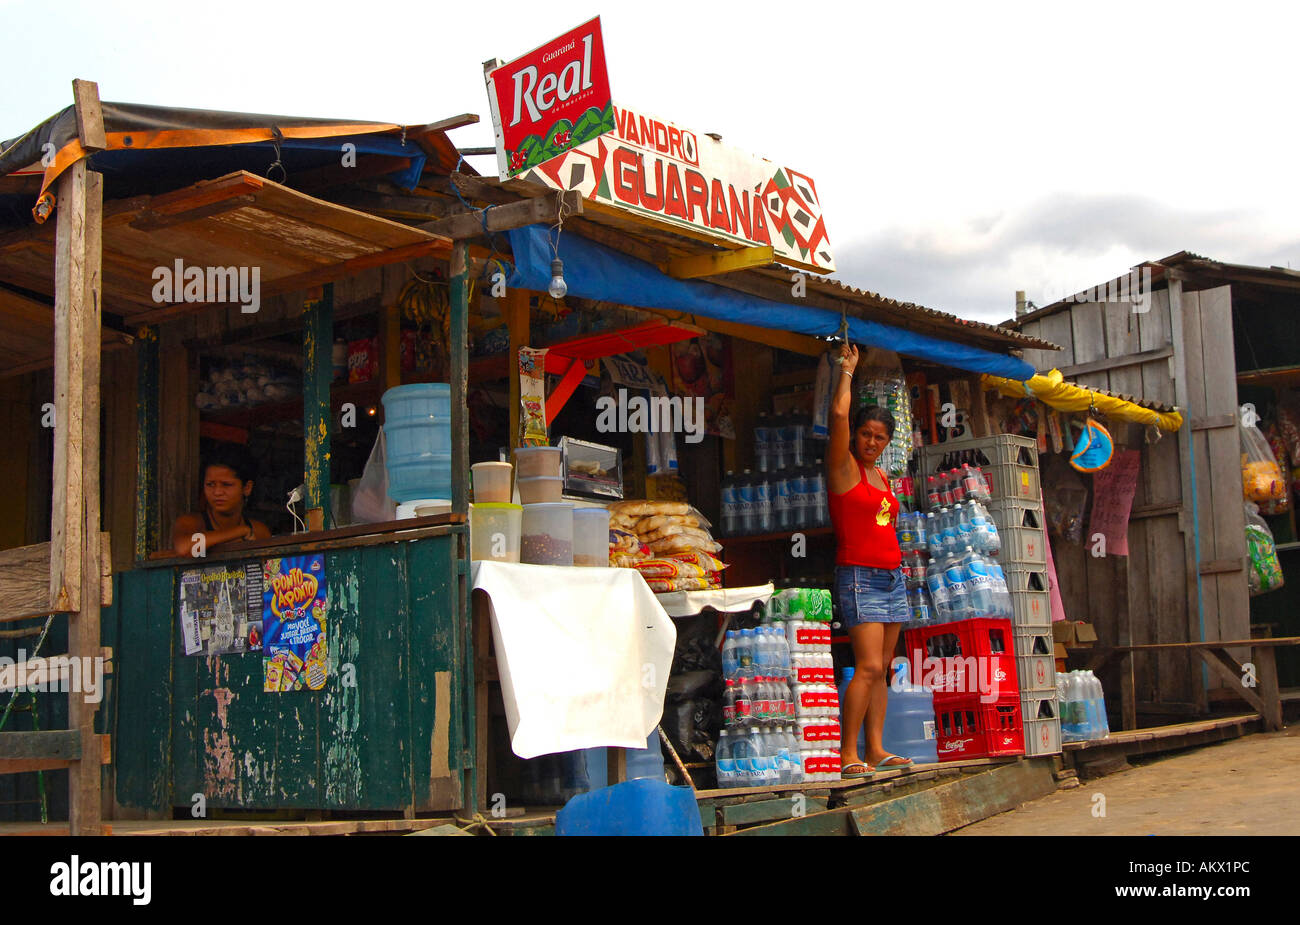 Local retail store in a poor neighbourhood favela, Manaus, Brazil Stock Photo